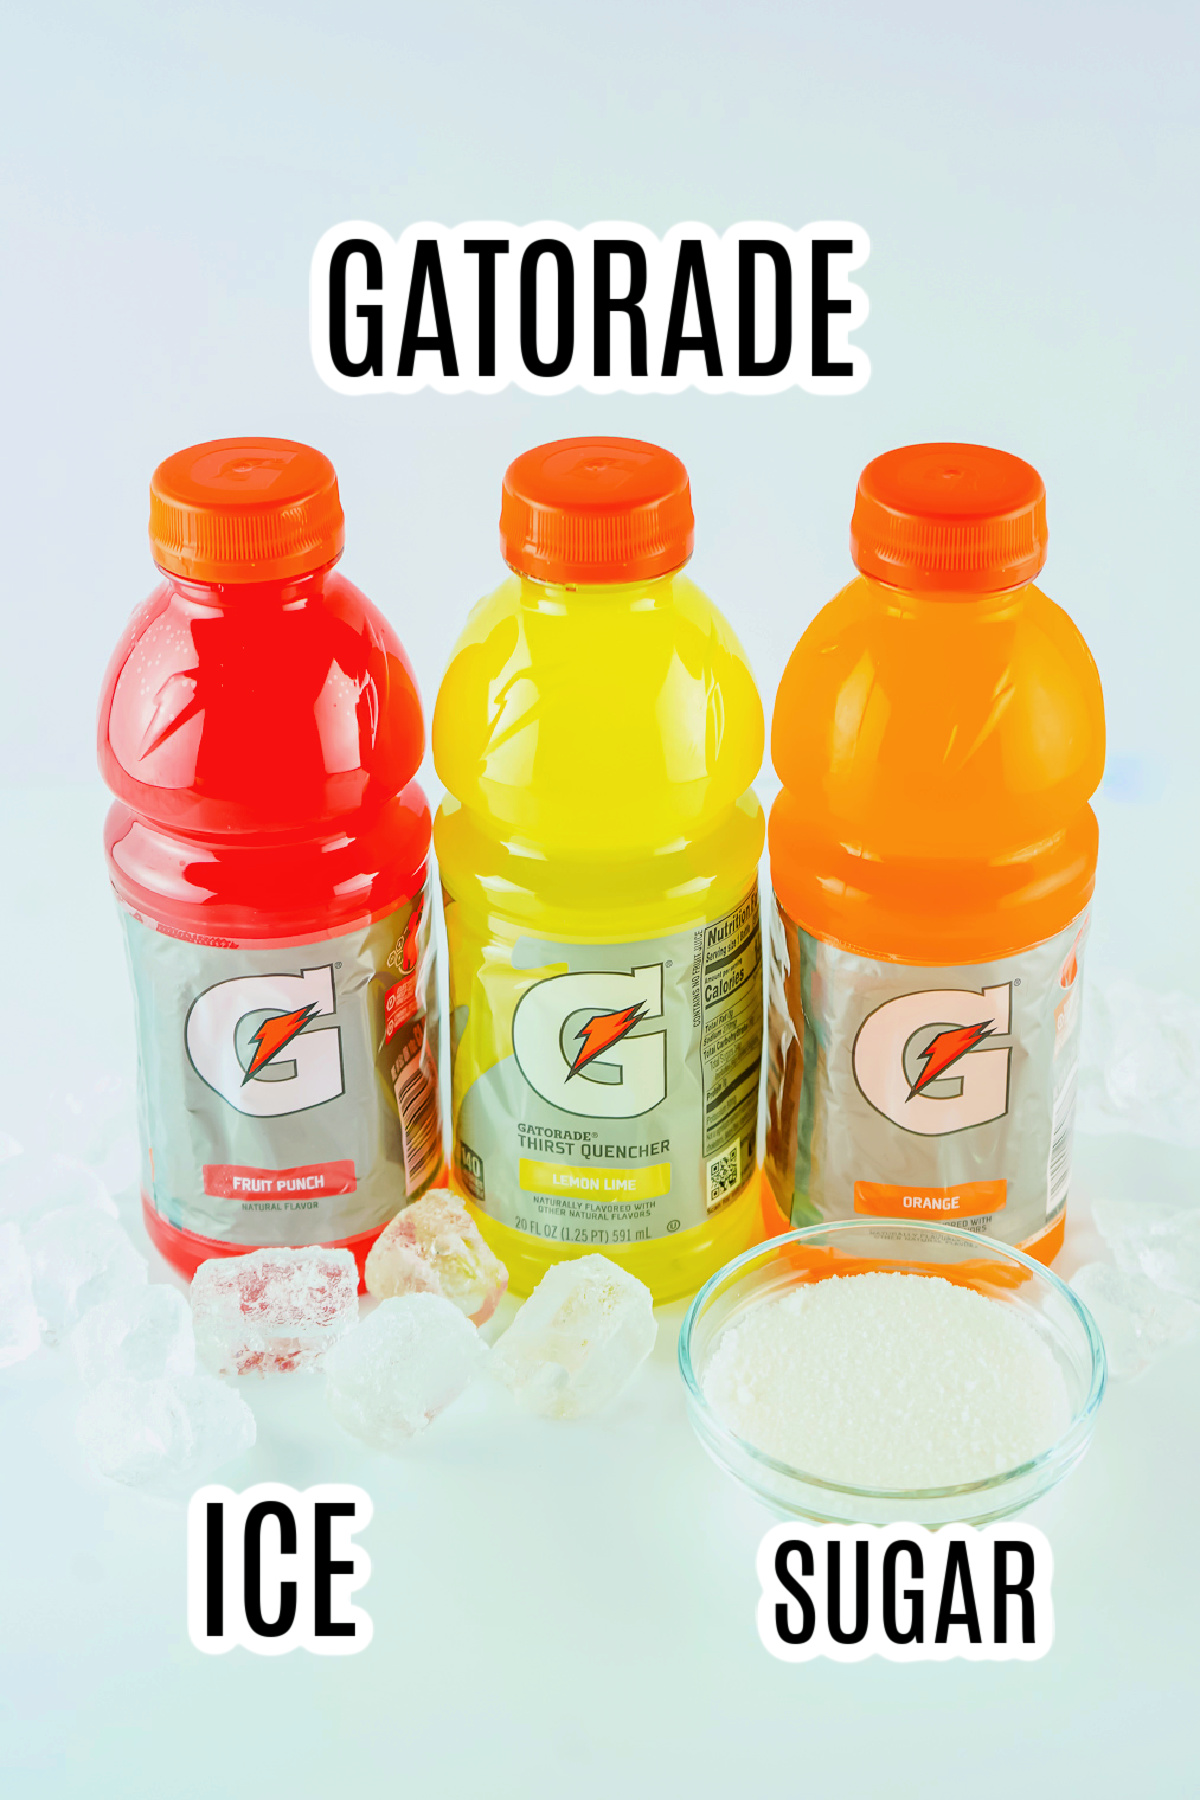 The ingredients needed to make the Gatorade Slushies include Gatorade, ice and sugar.